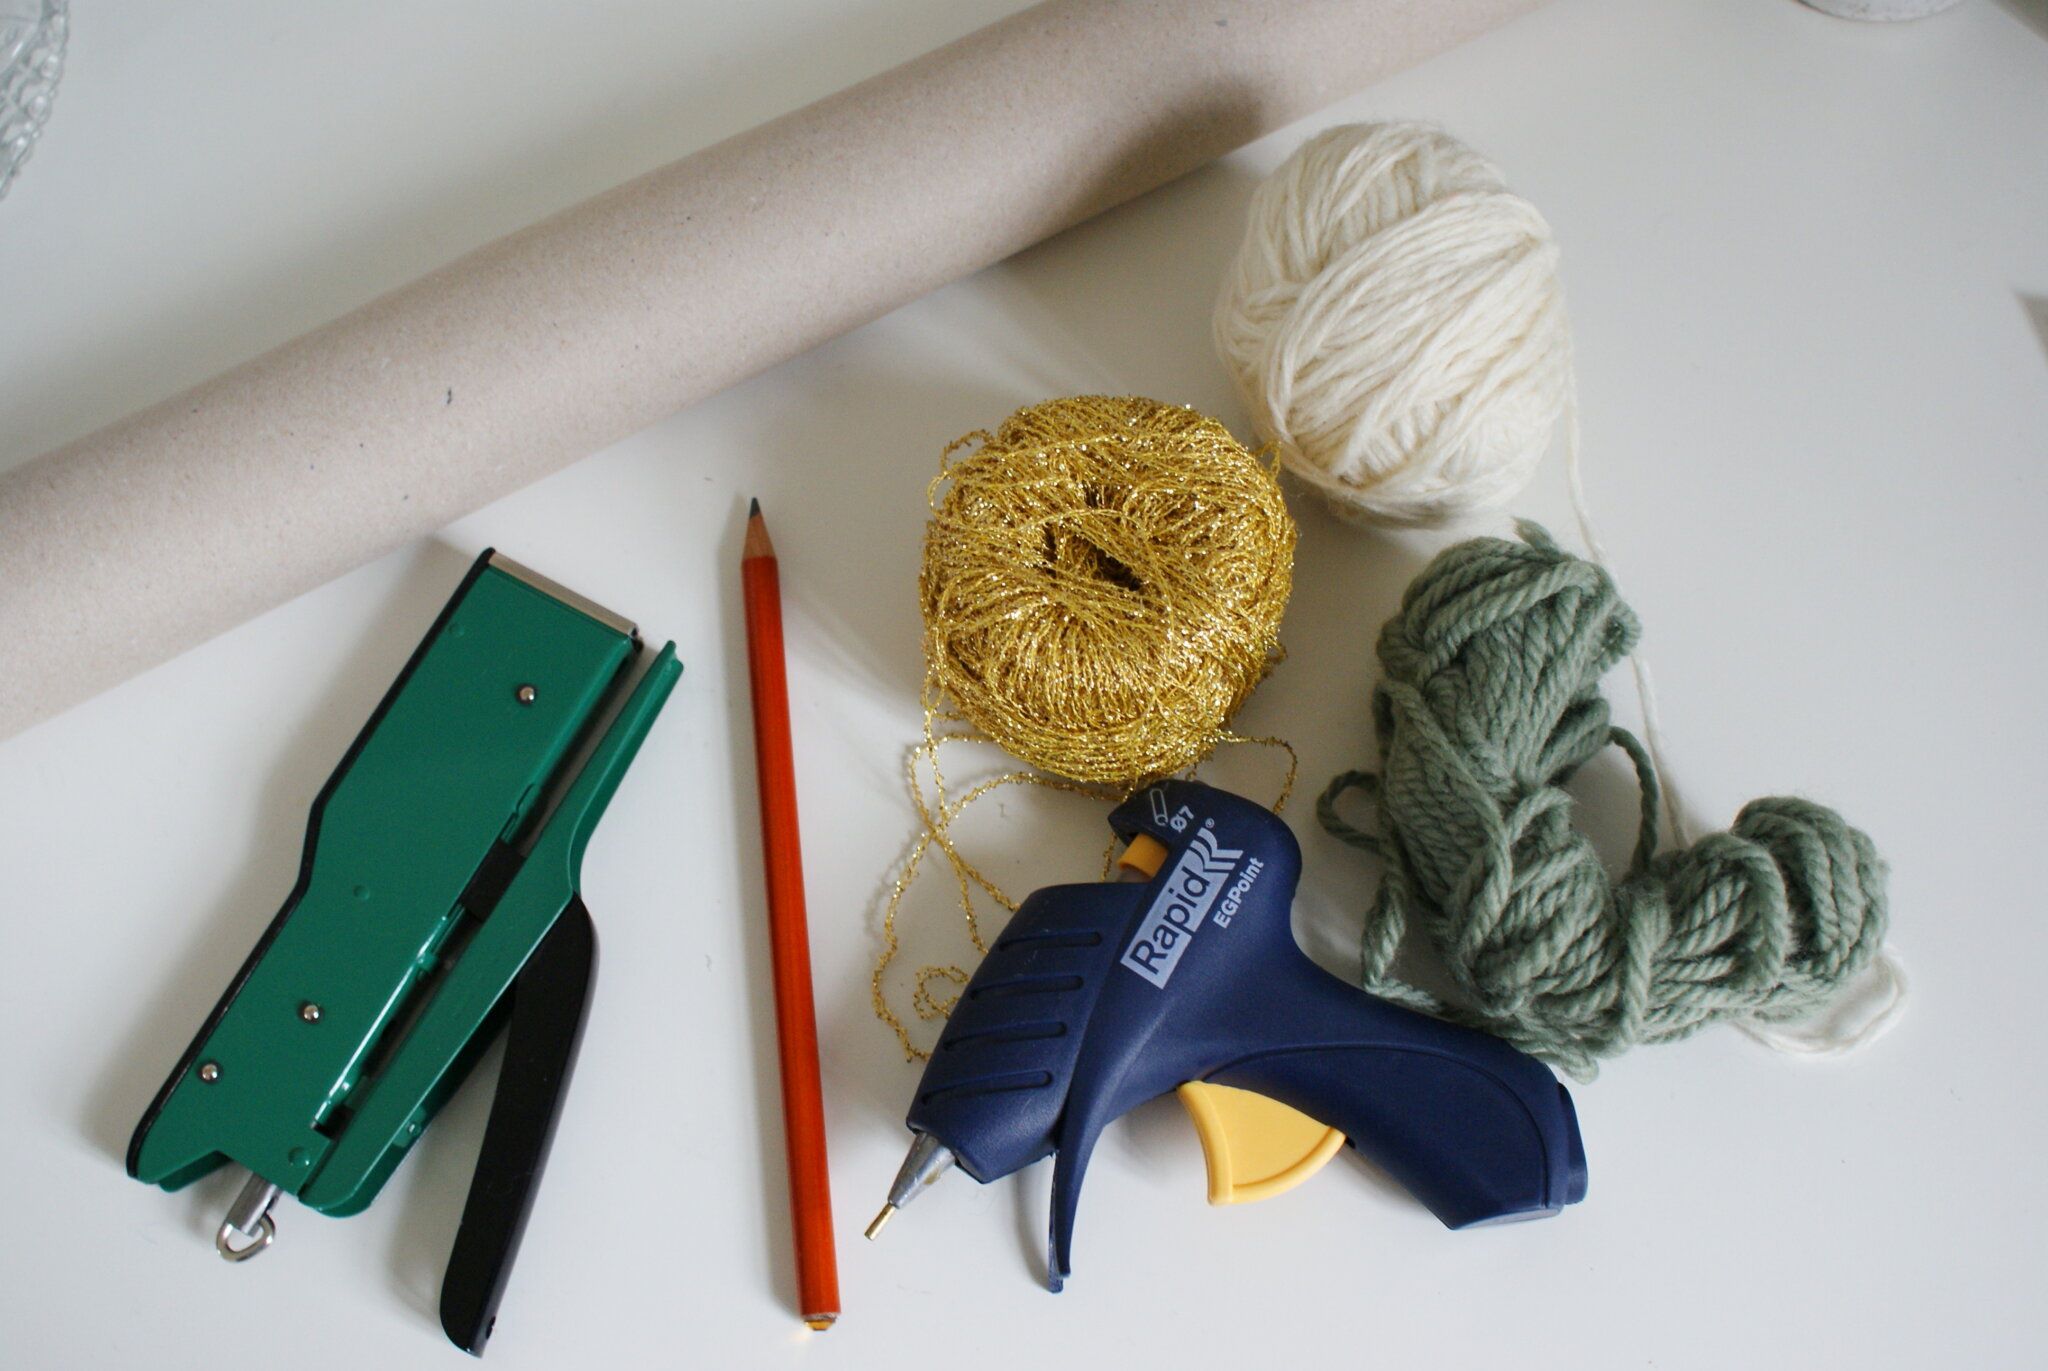 DIY Room Decoration: How To Make Yarn Or Wool Decor